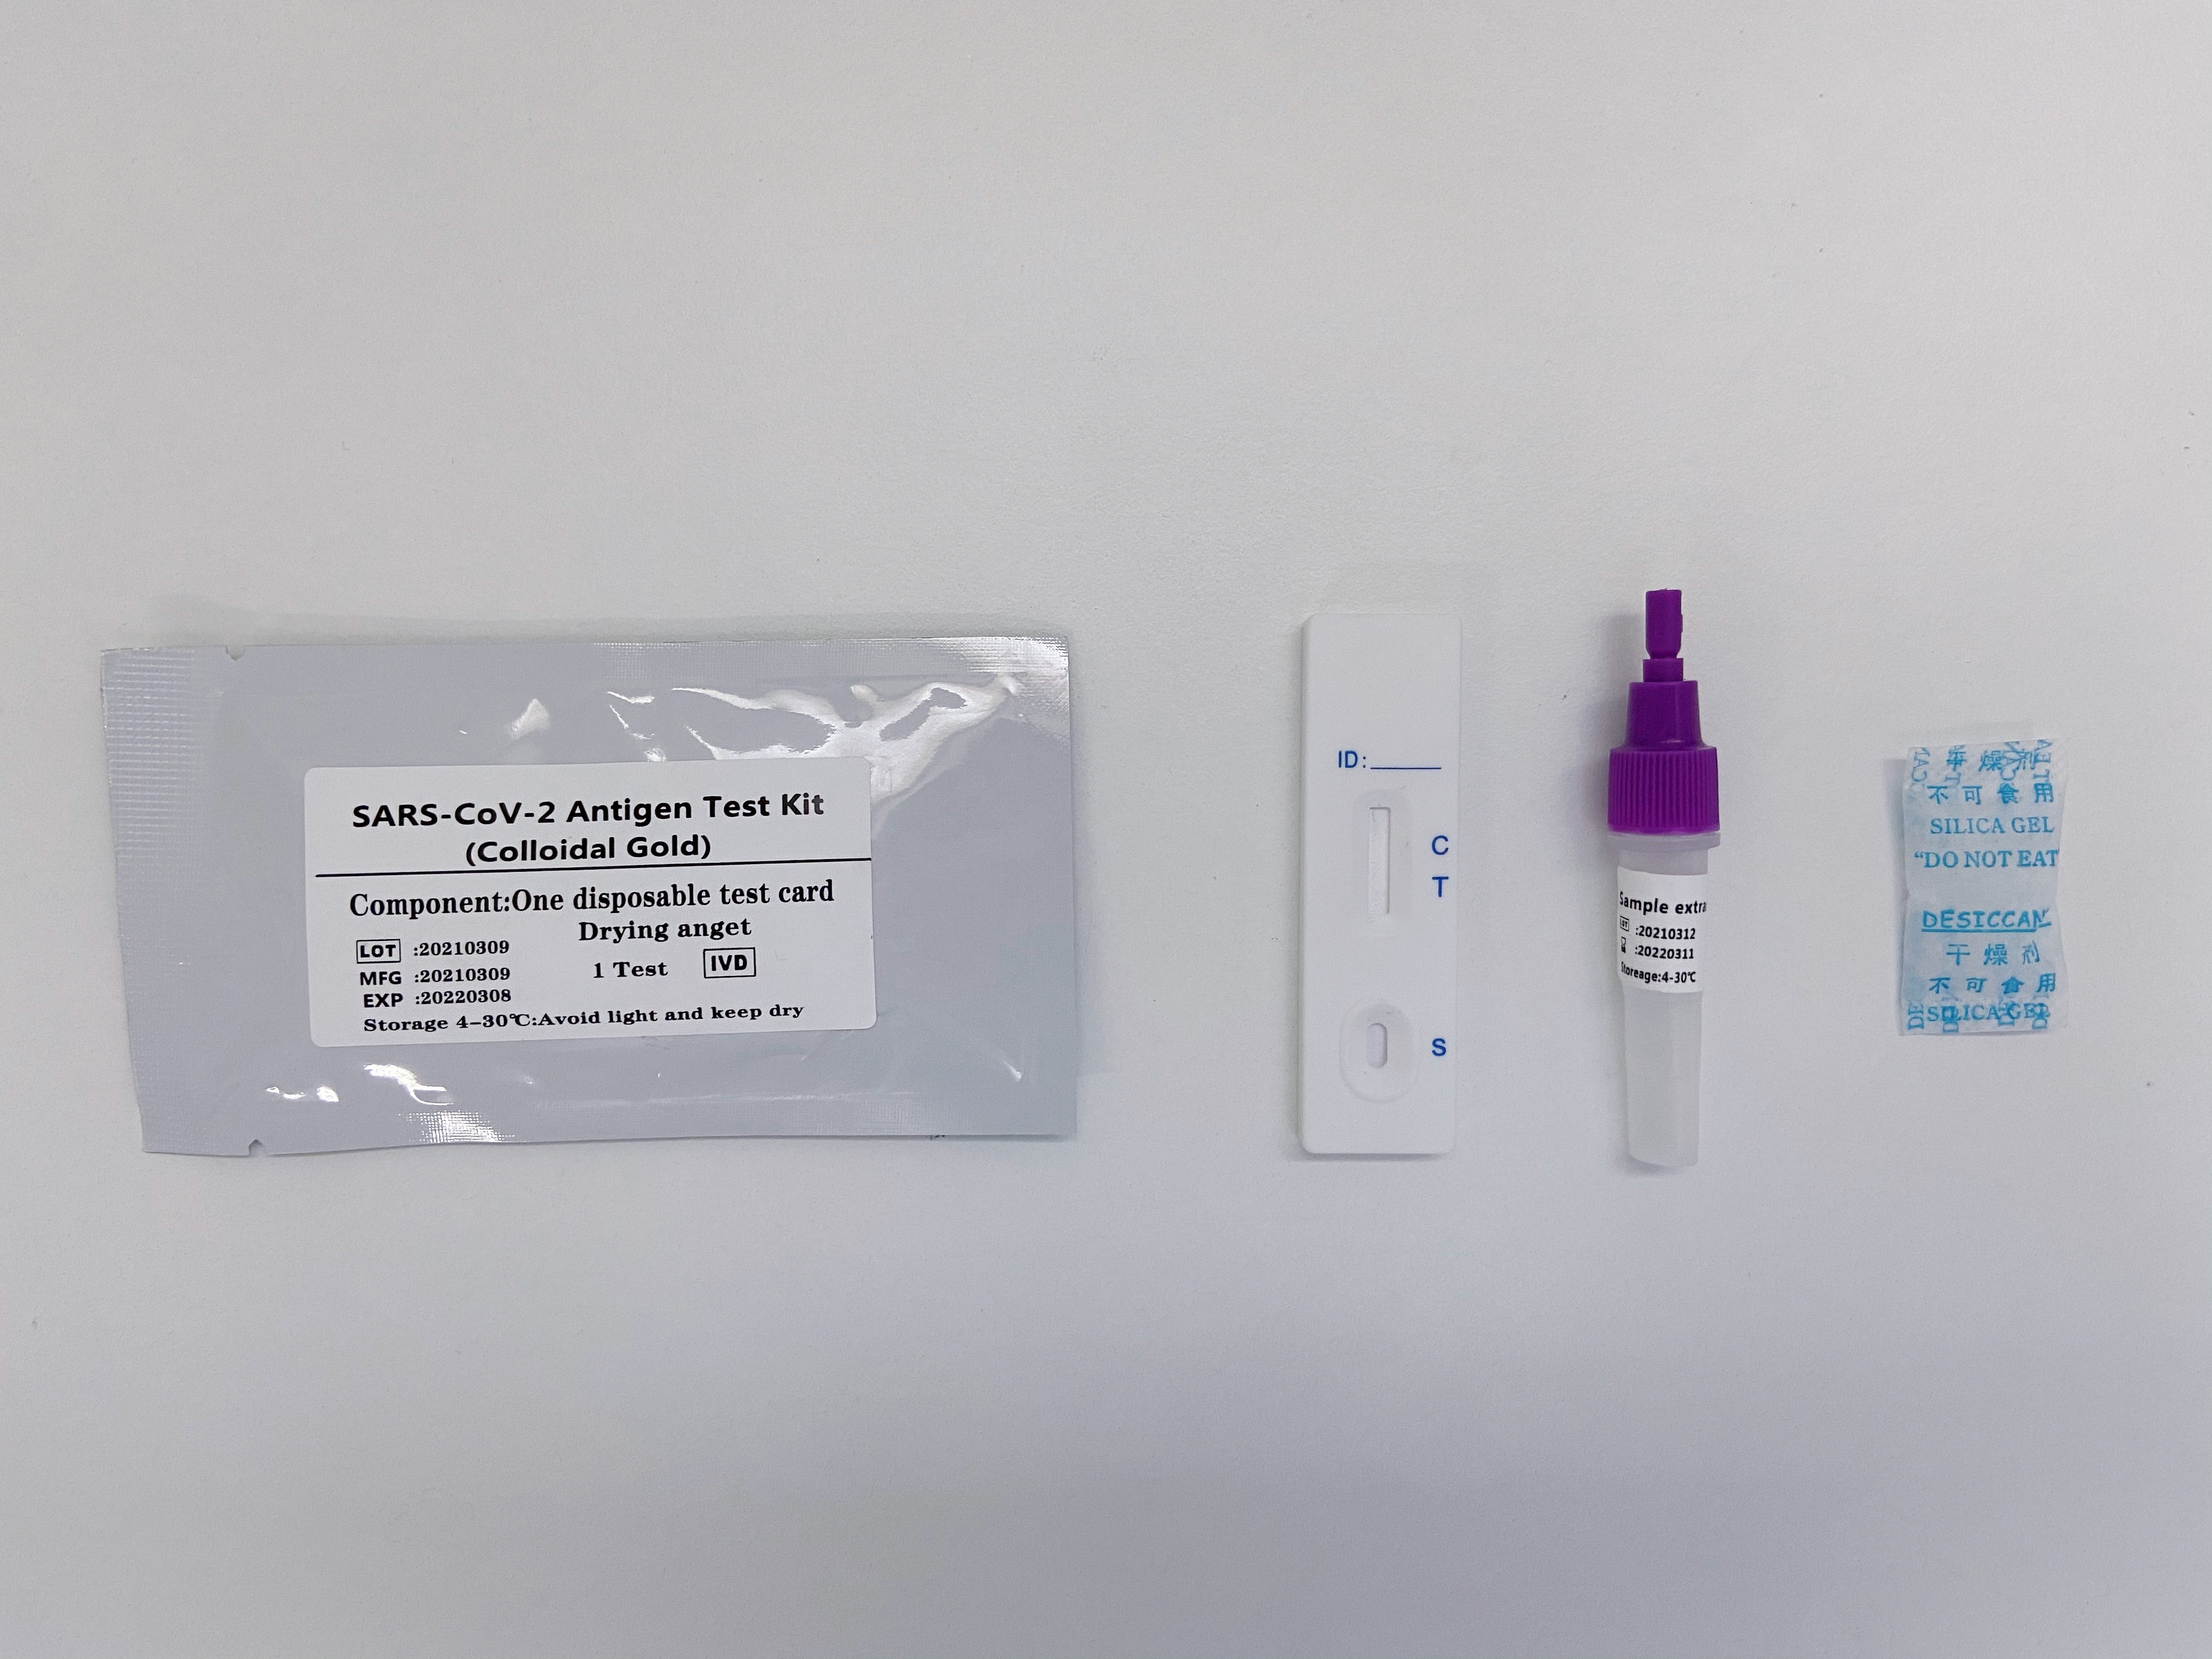 SARS-CoV-2 Antigen Test Kit (Colloidal Gold)